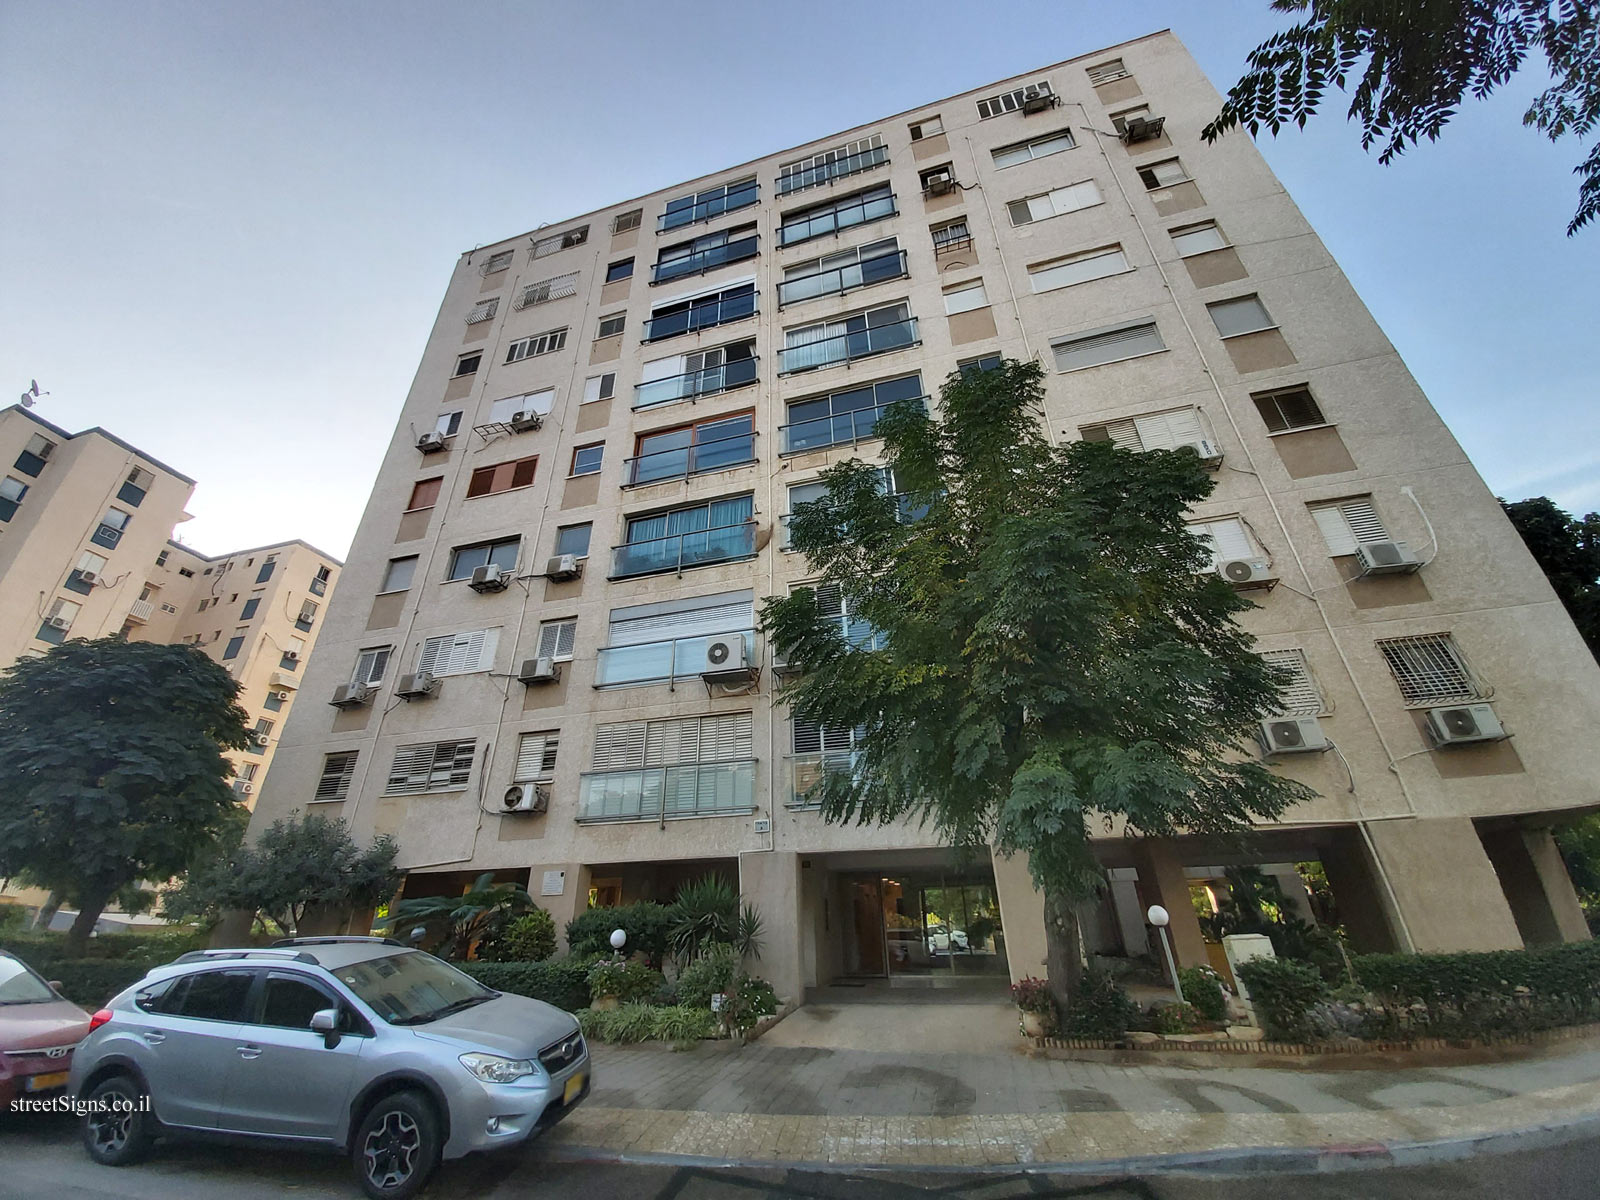 The house of Ehud Manor - Bareli St 8, Tel Aviv-Yafo, Israel